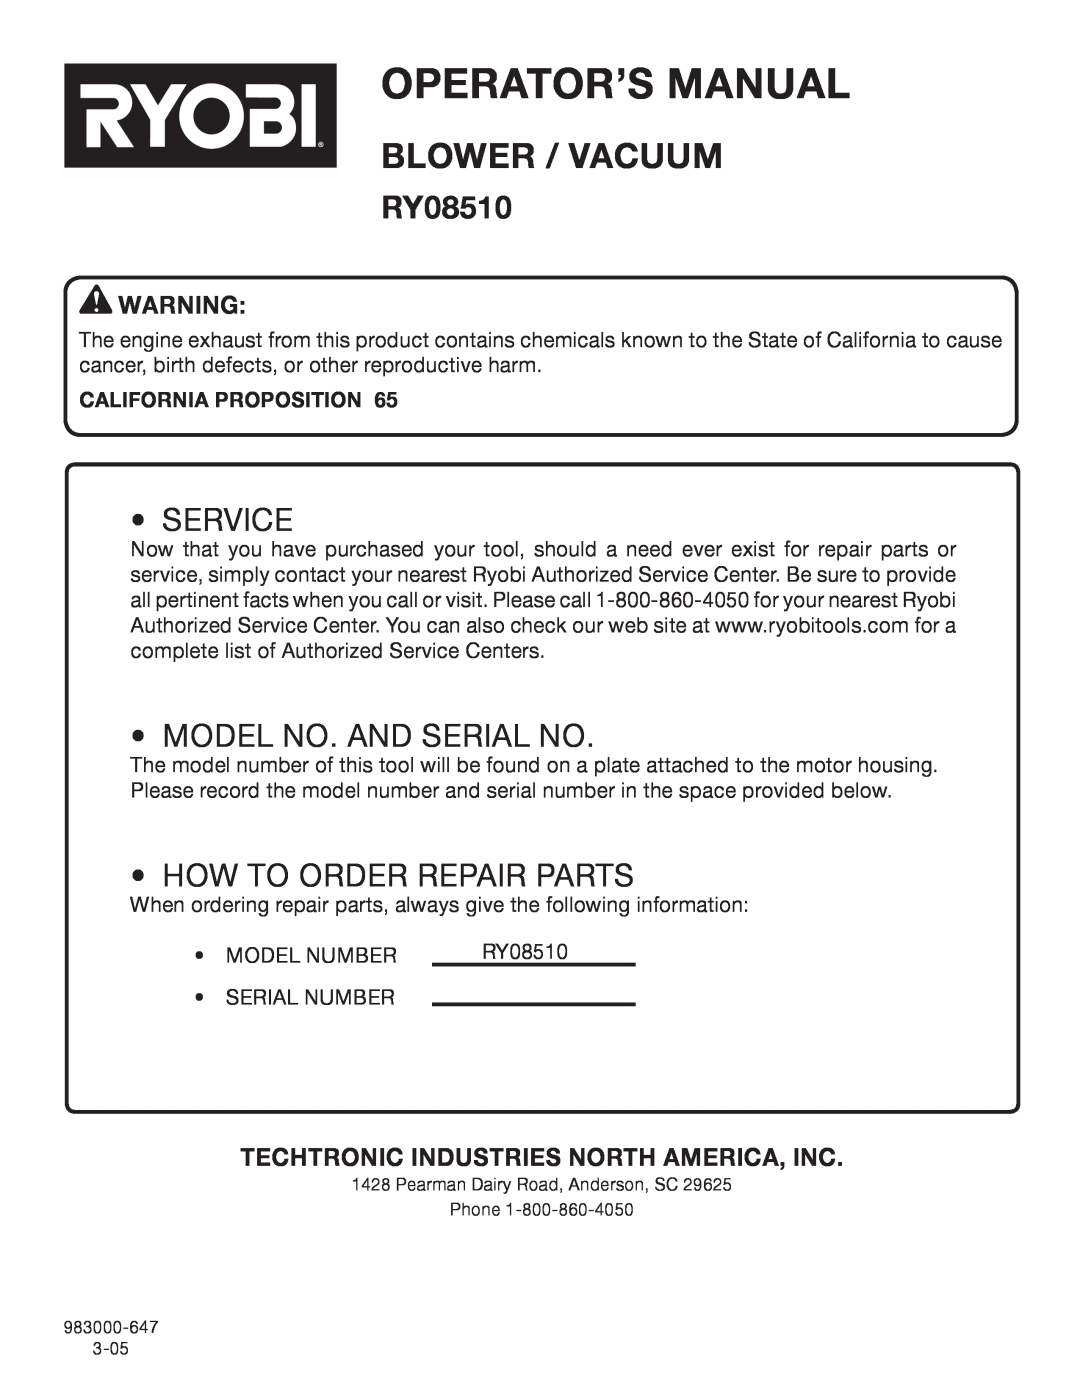 Ryobi RY08510 manual Operator’S Manual, Blower / Vacuum, Service, Model No. And Serial No, How To Order Repair Parts 